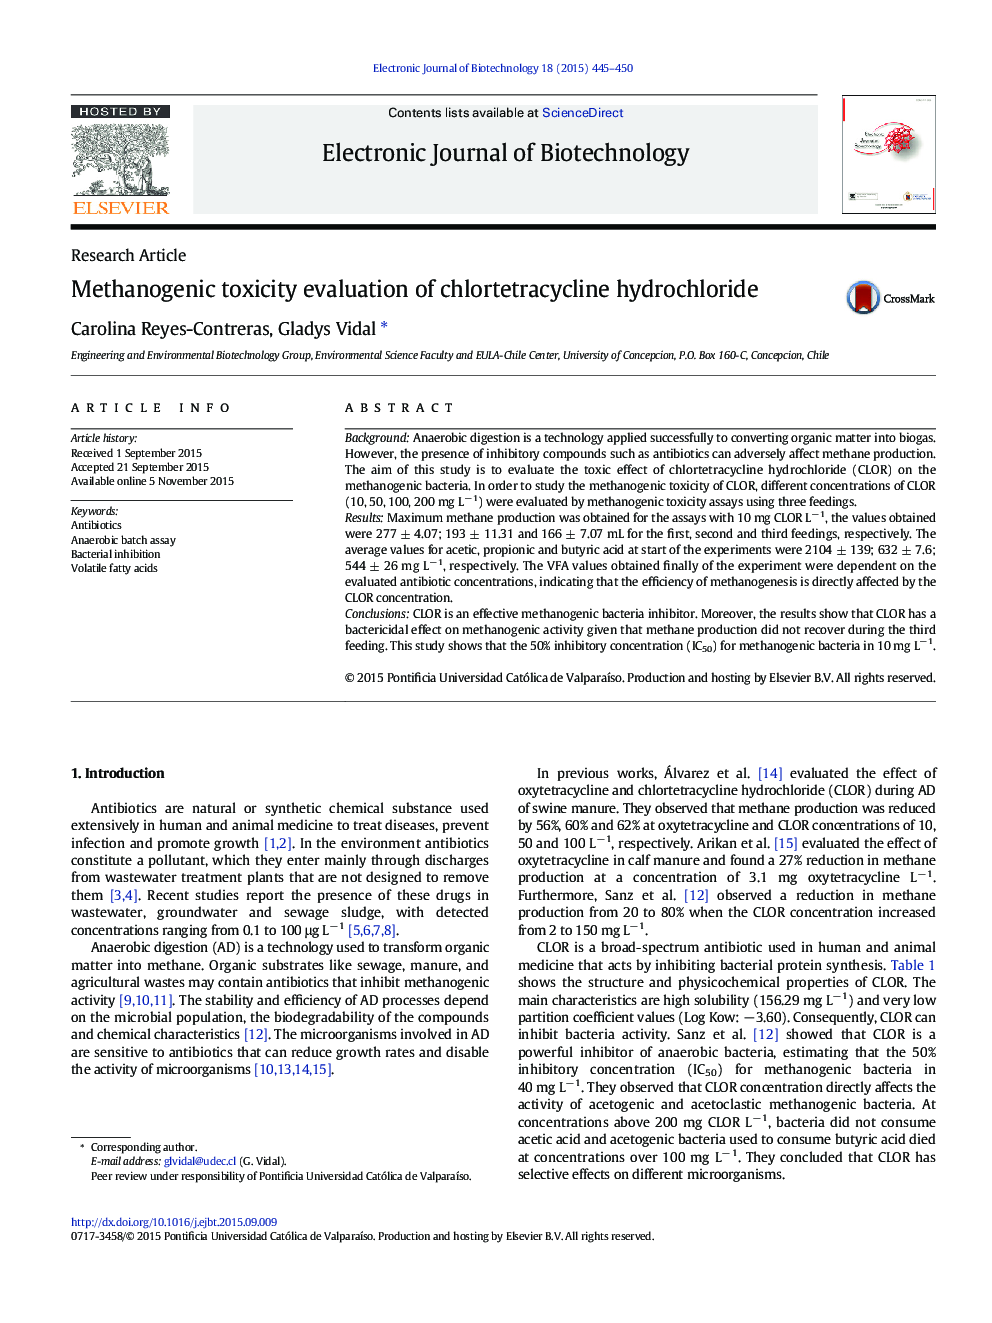 Methanogenic toxicity evaluation of chlortetracycline hydrochloride 